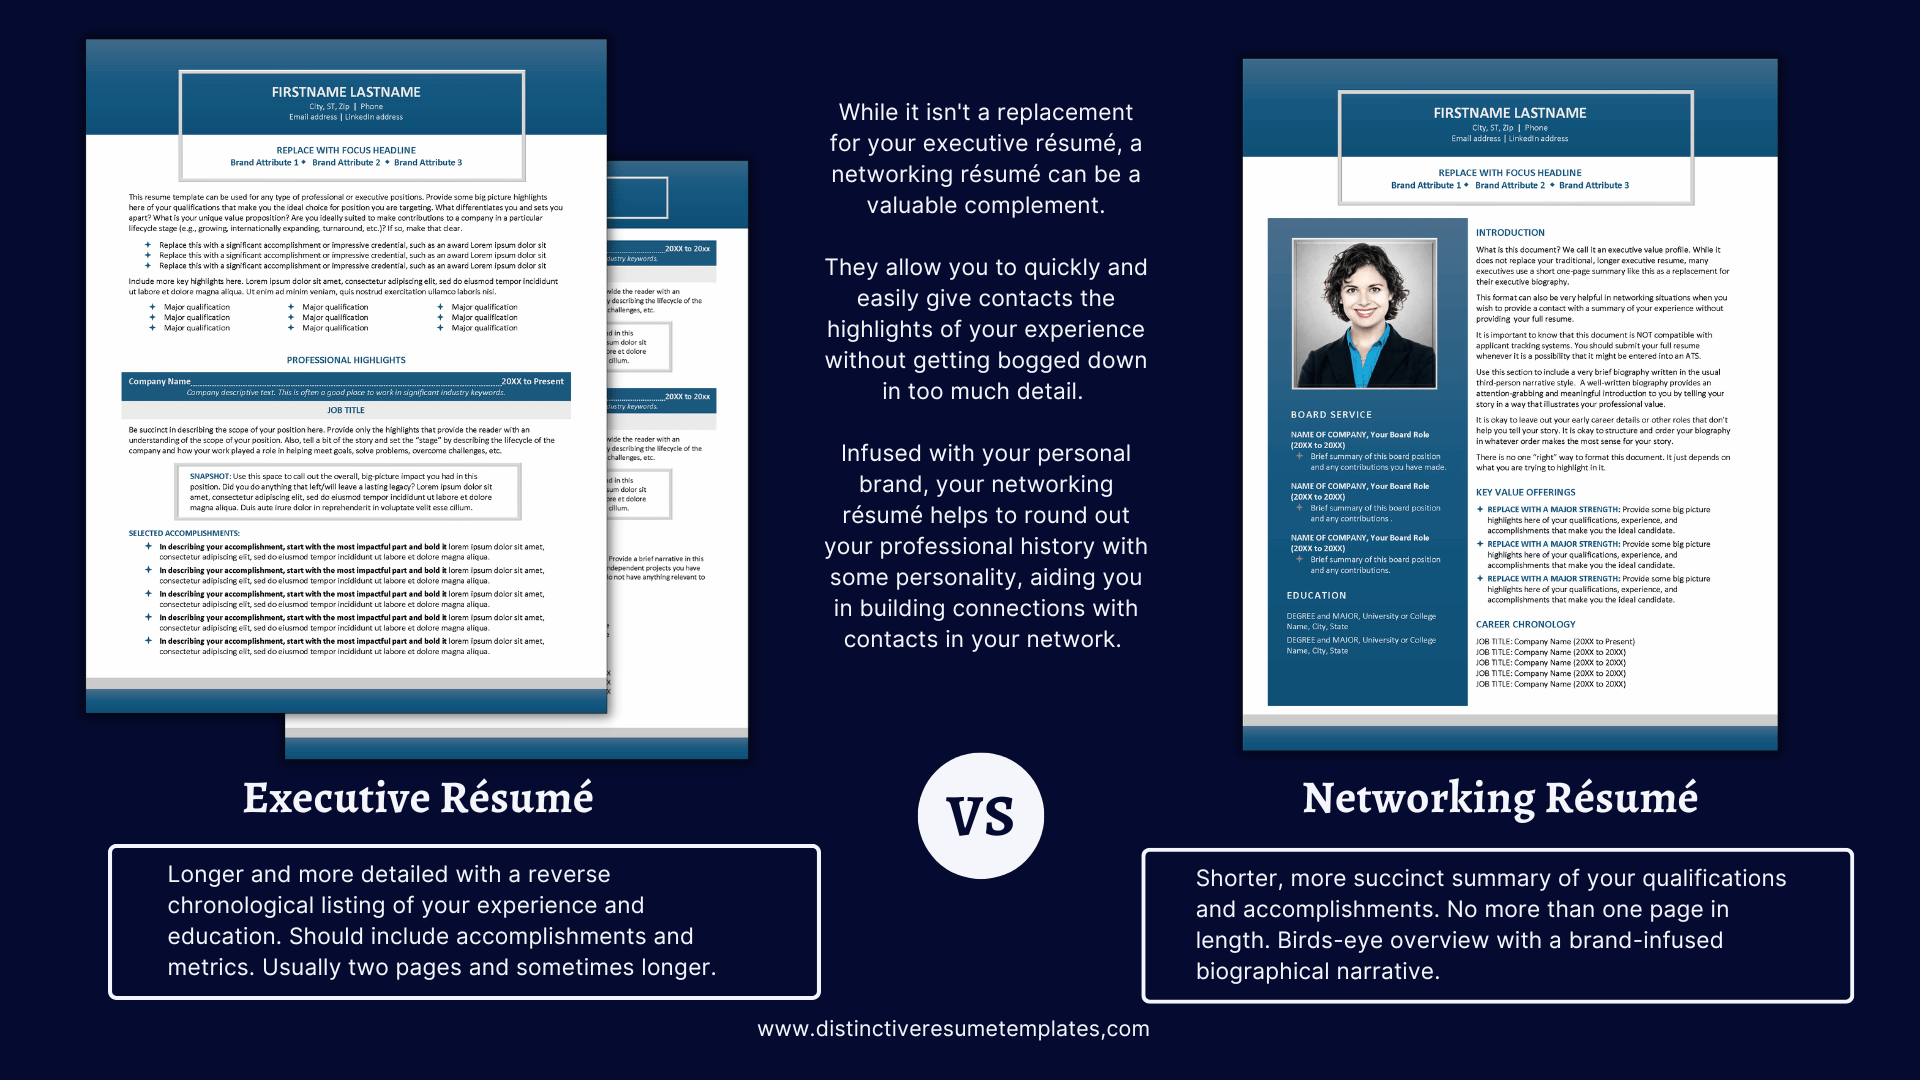 Example Networking Resume vs Executive Resume